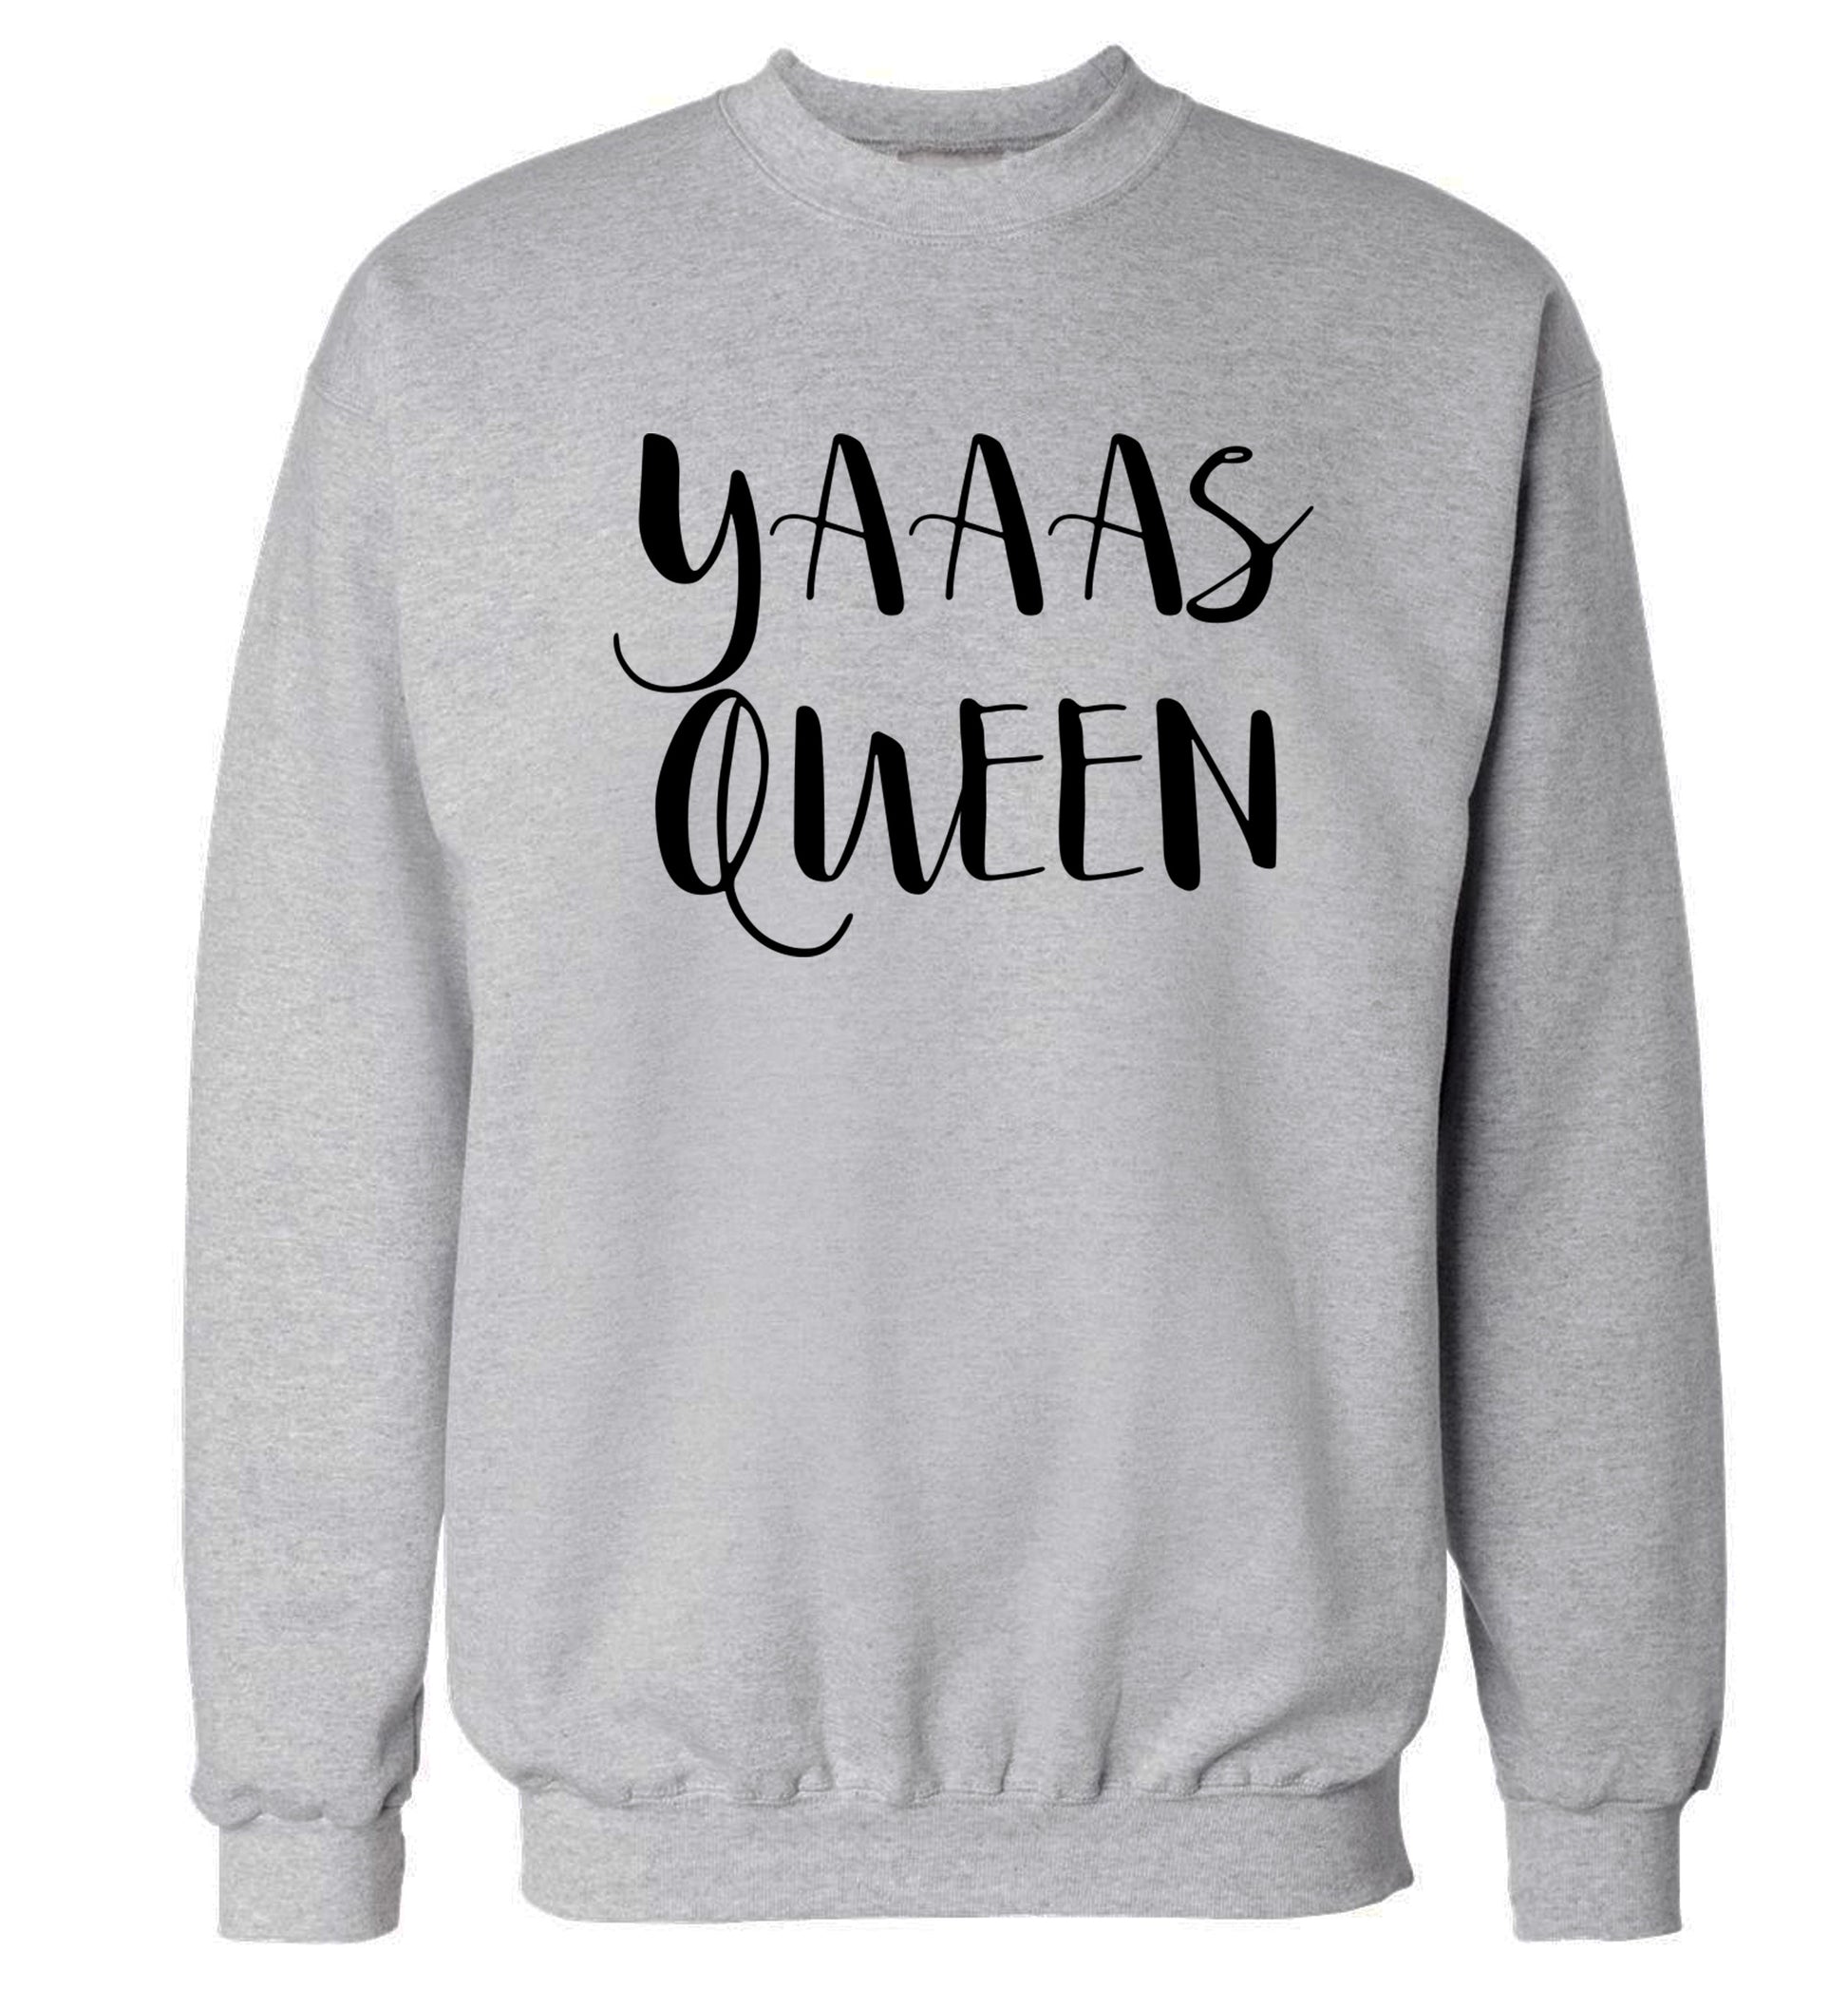 Yas Queen Adult's unisex grey Sweater 2XL